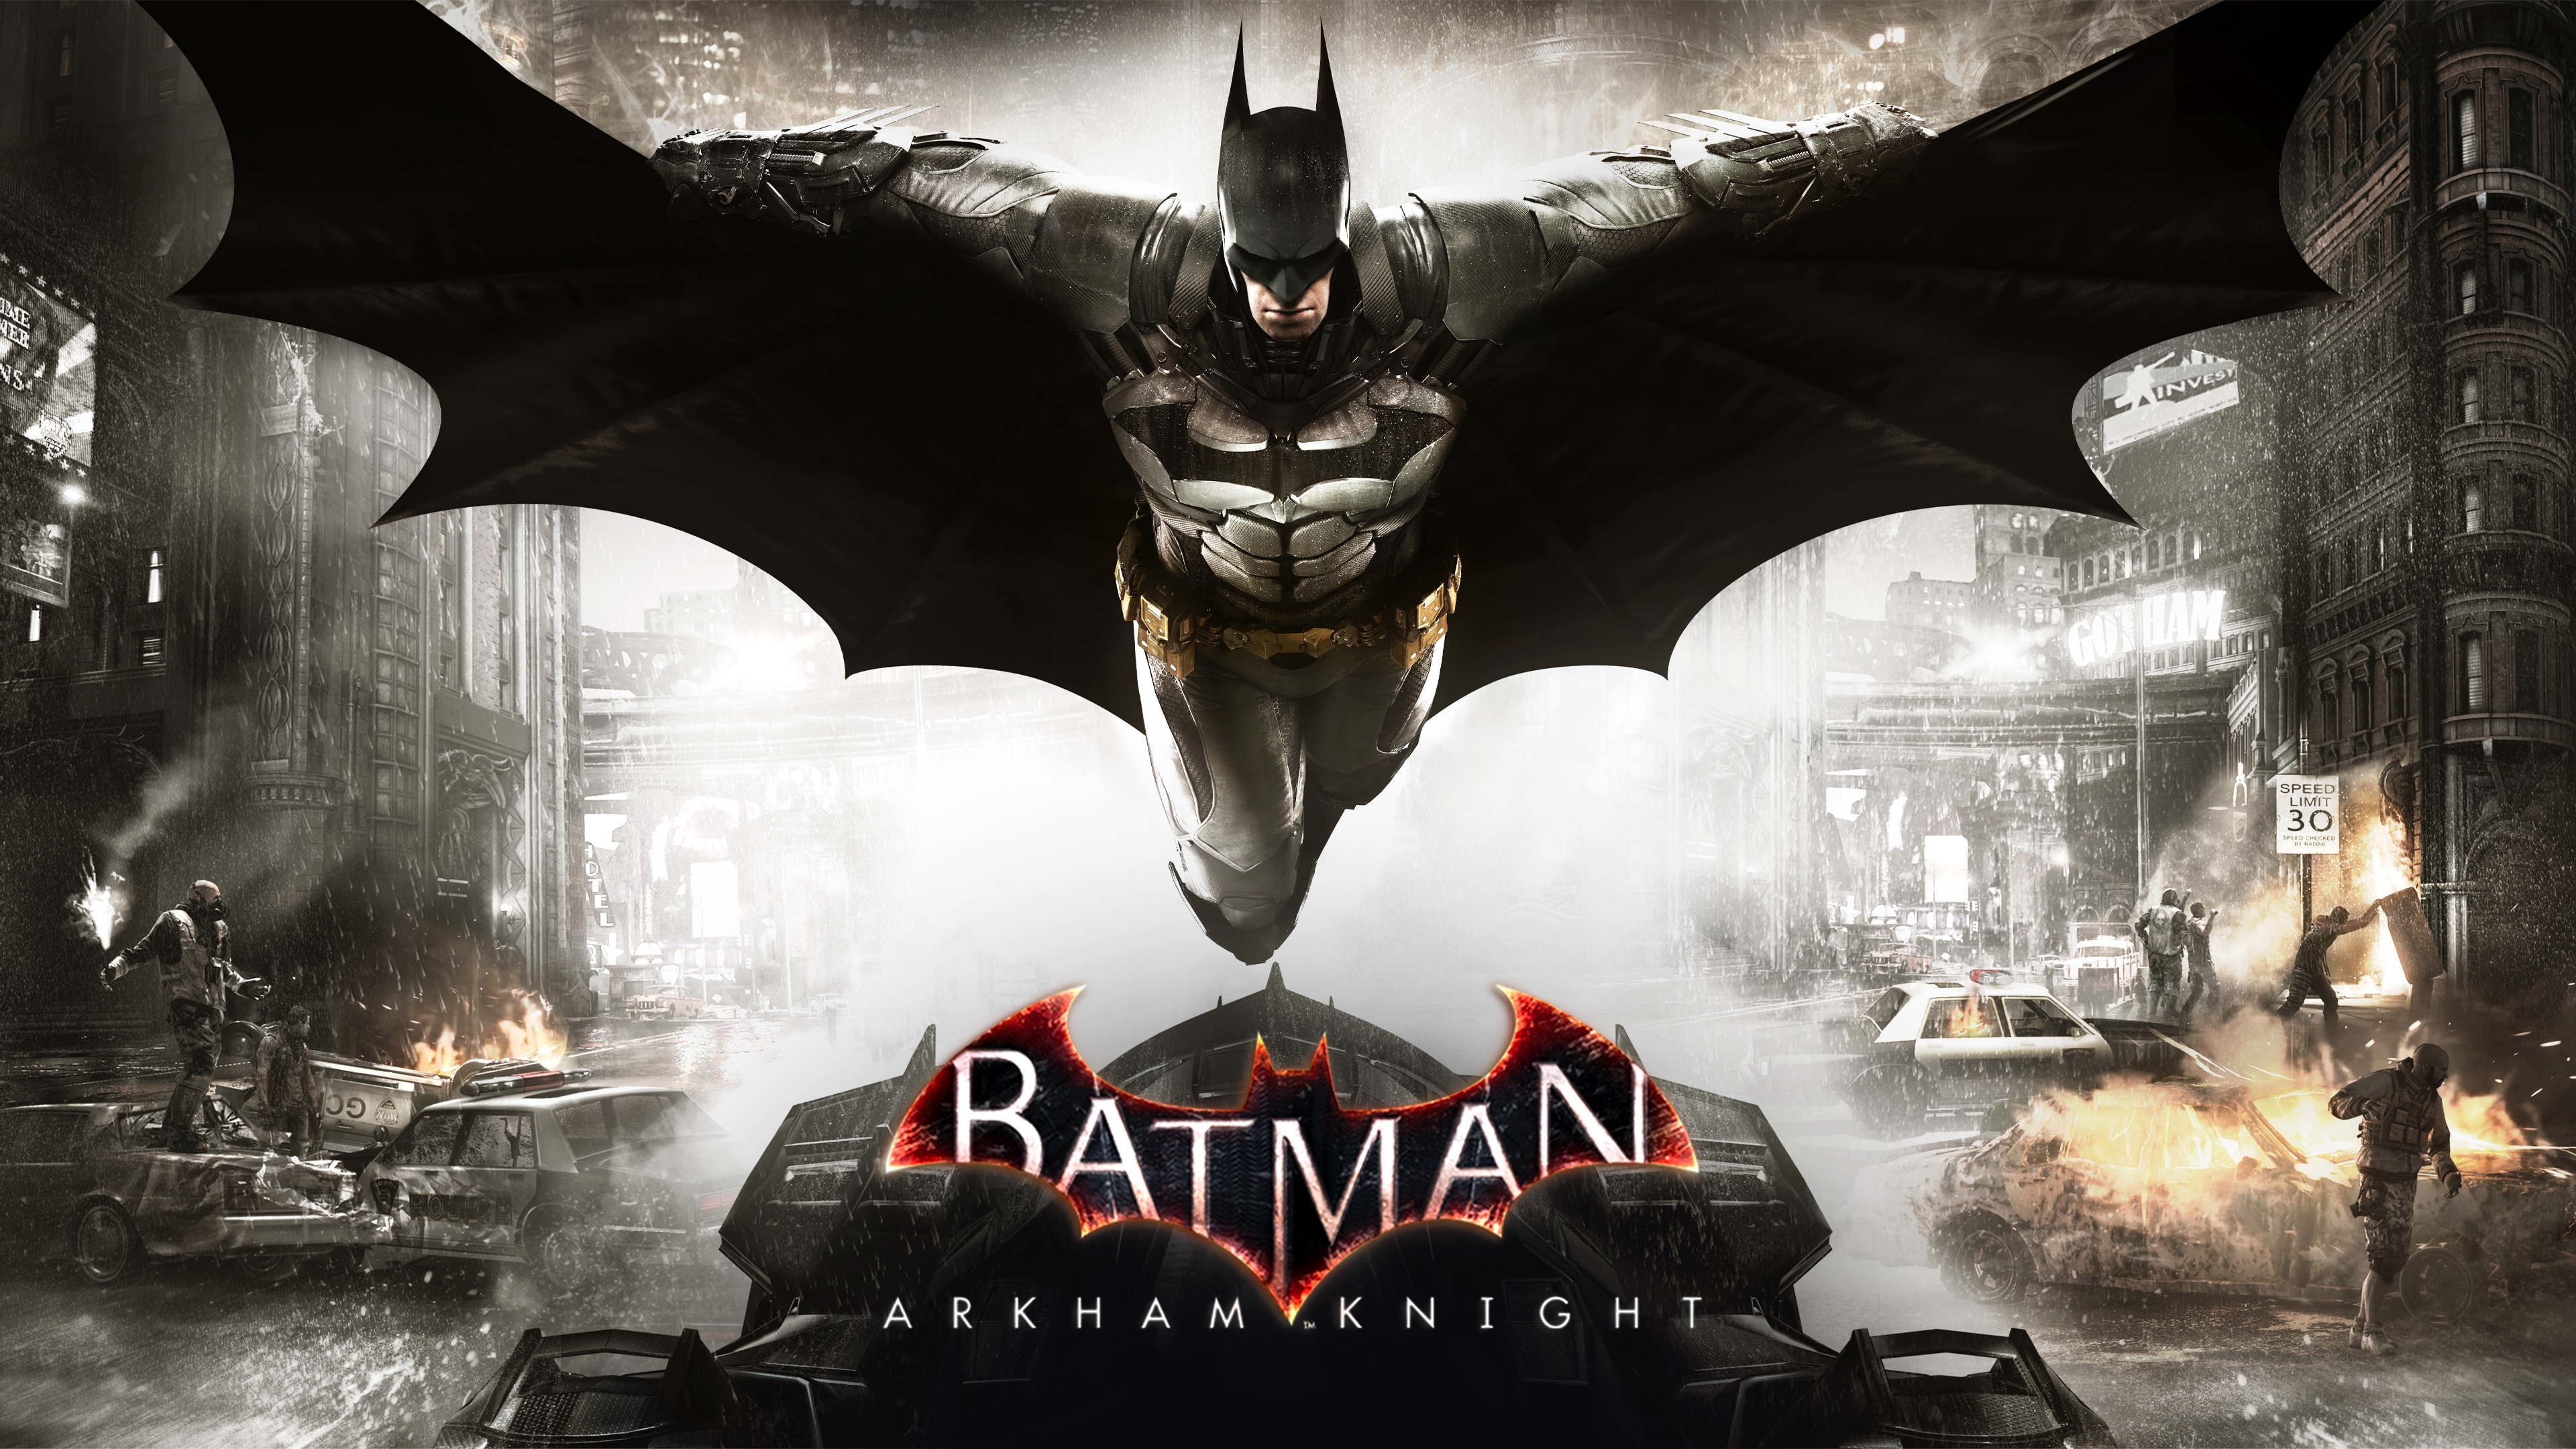 Arkham Origins Remaster on X: The Arkham Batman, all remastered.   / X